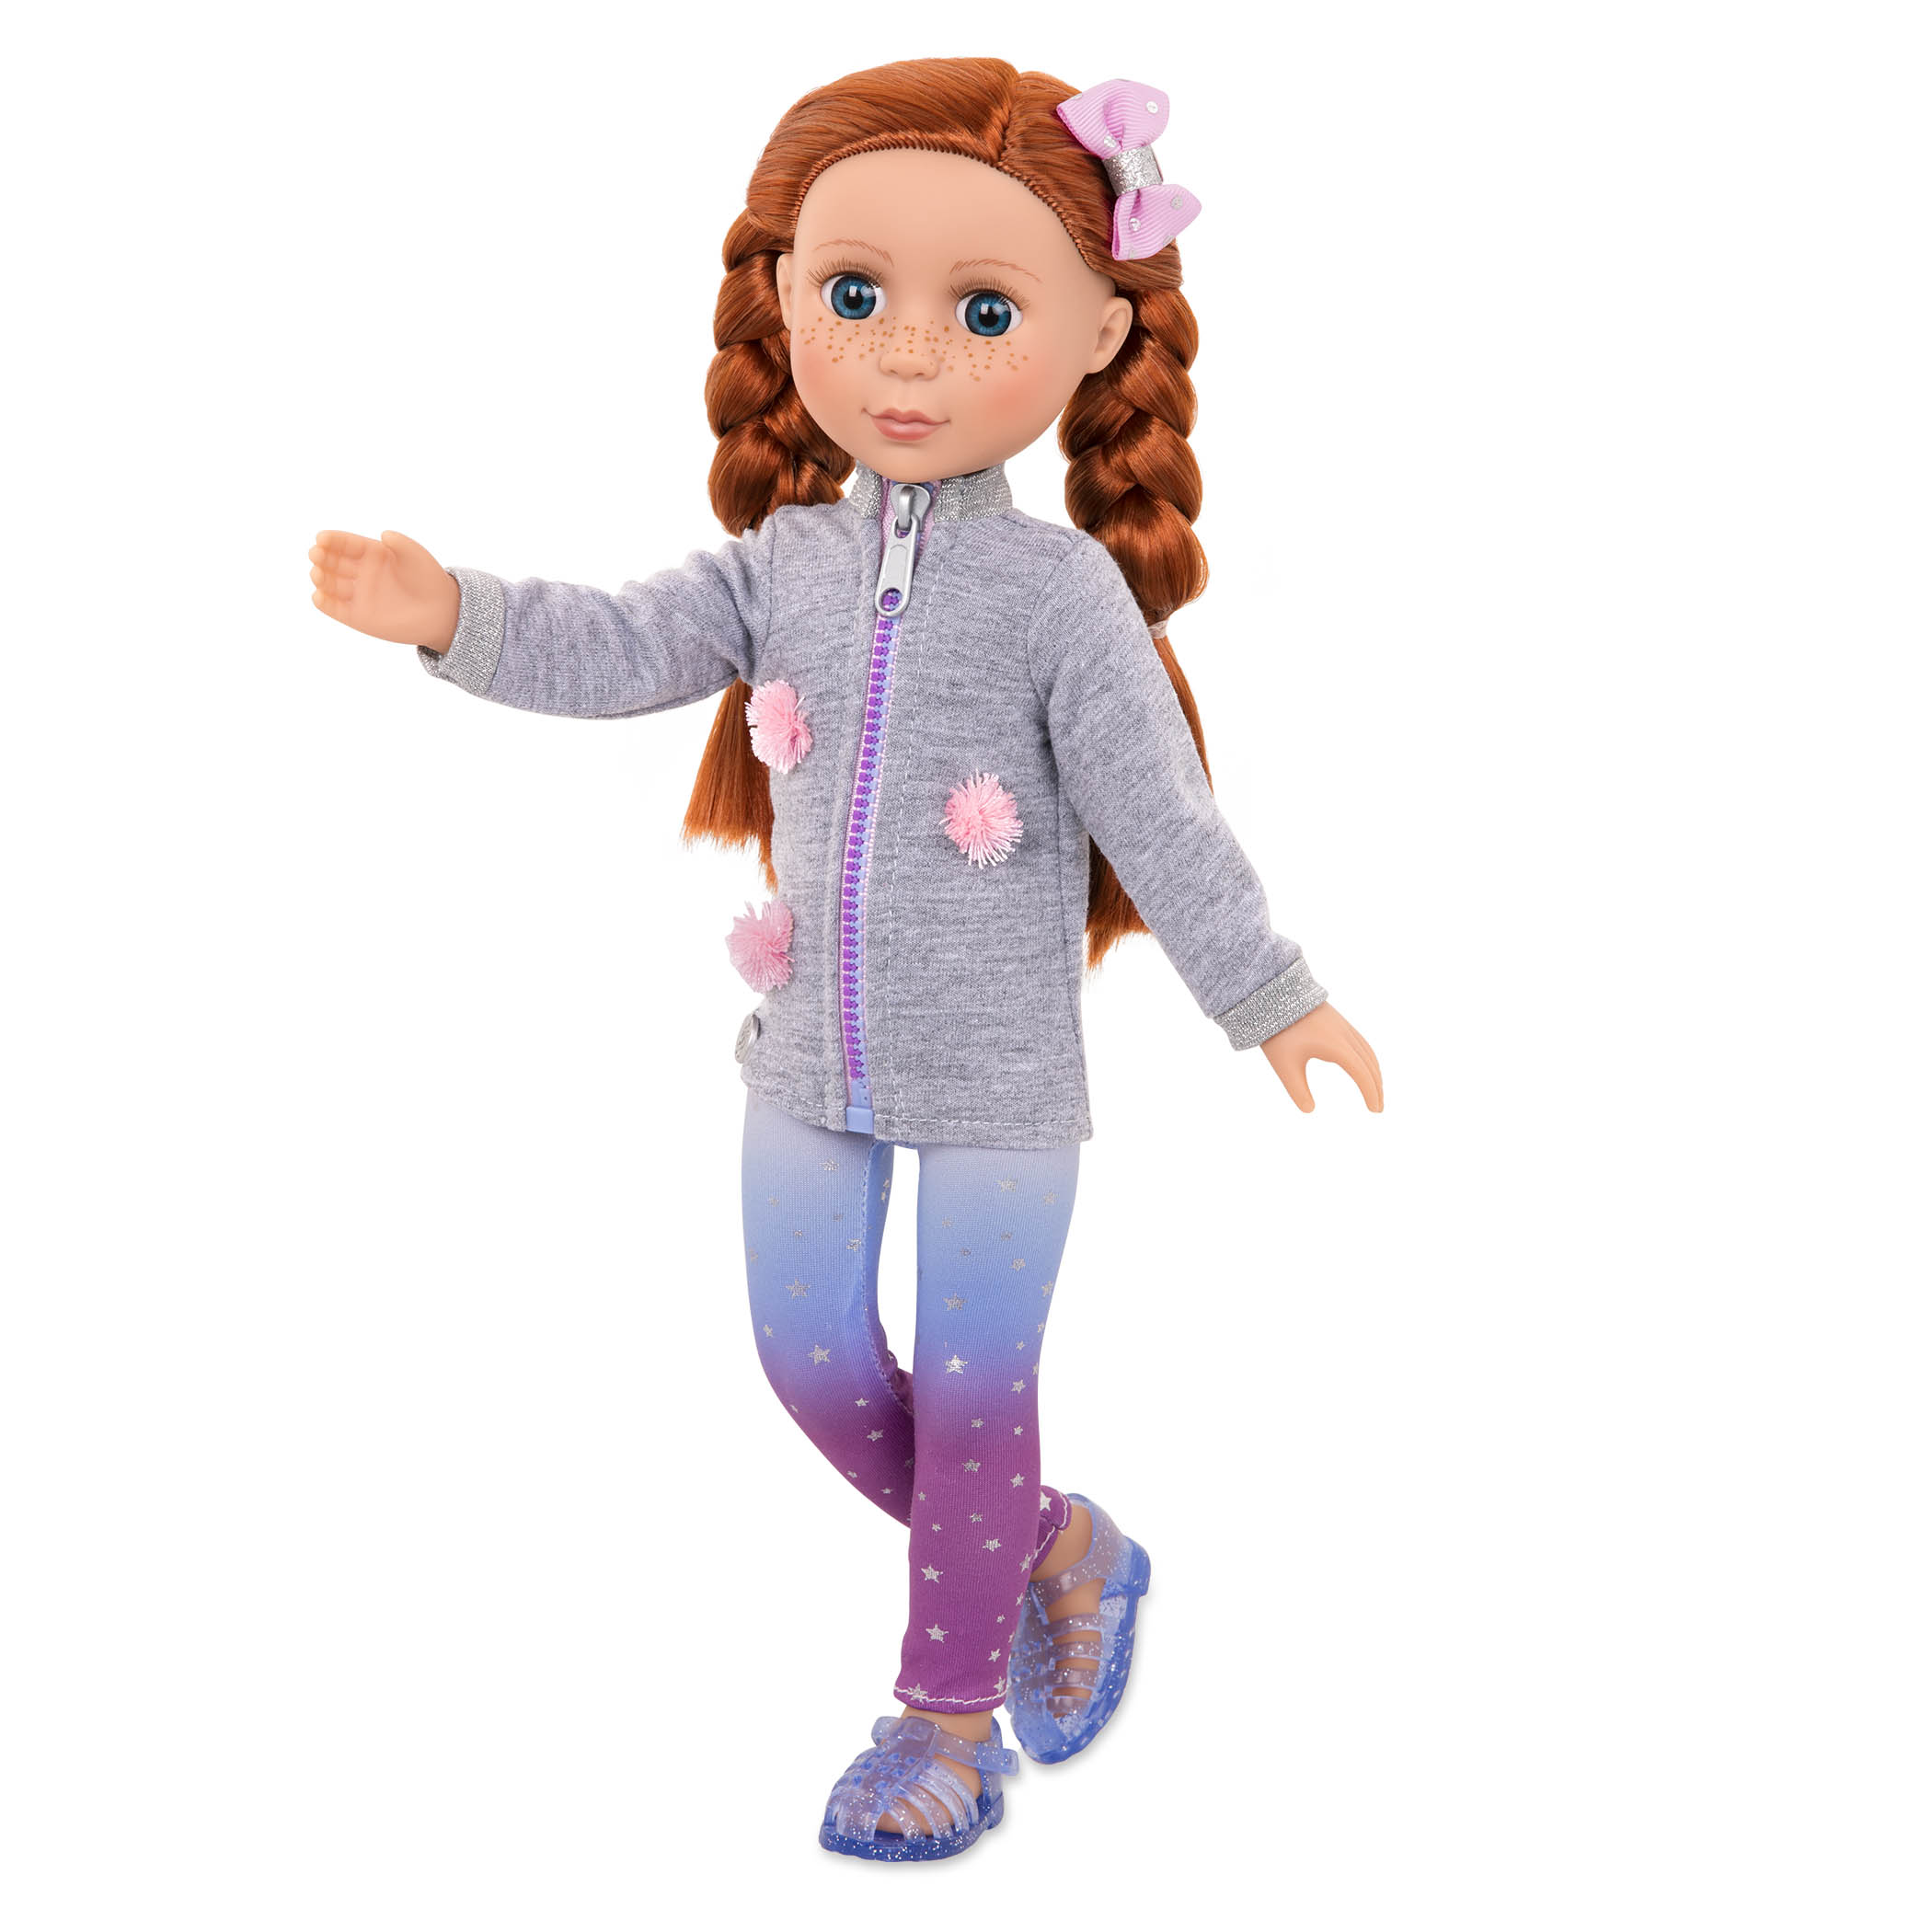  Glitter Girls - Bluebell 14-inch Poseable Fashion Doll